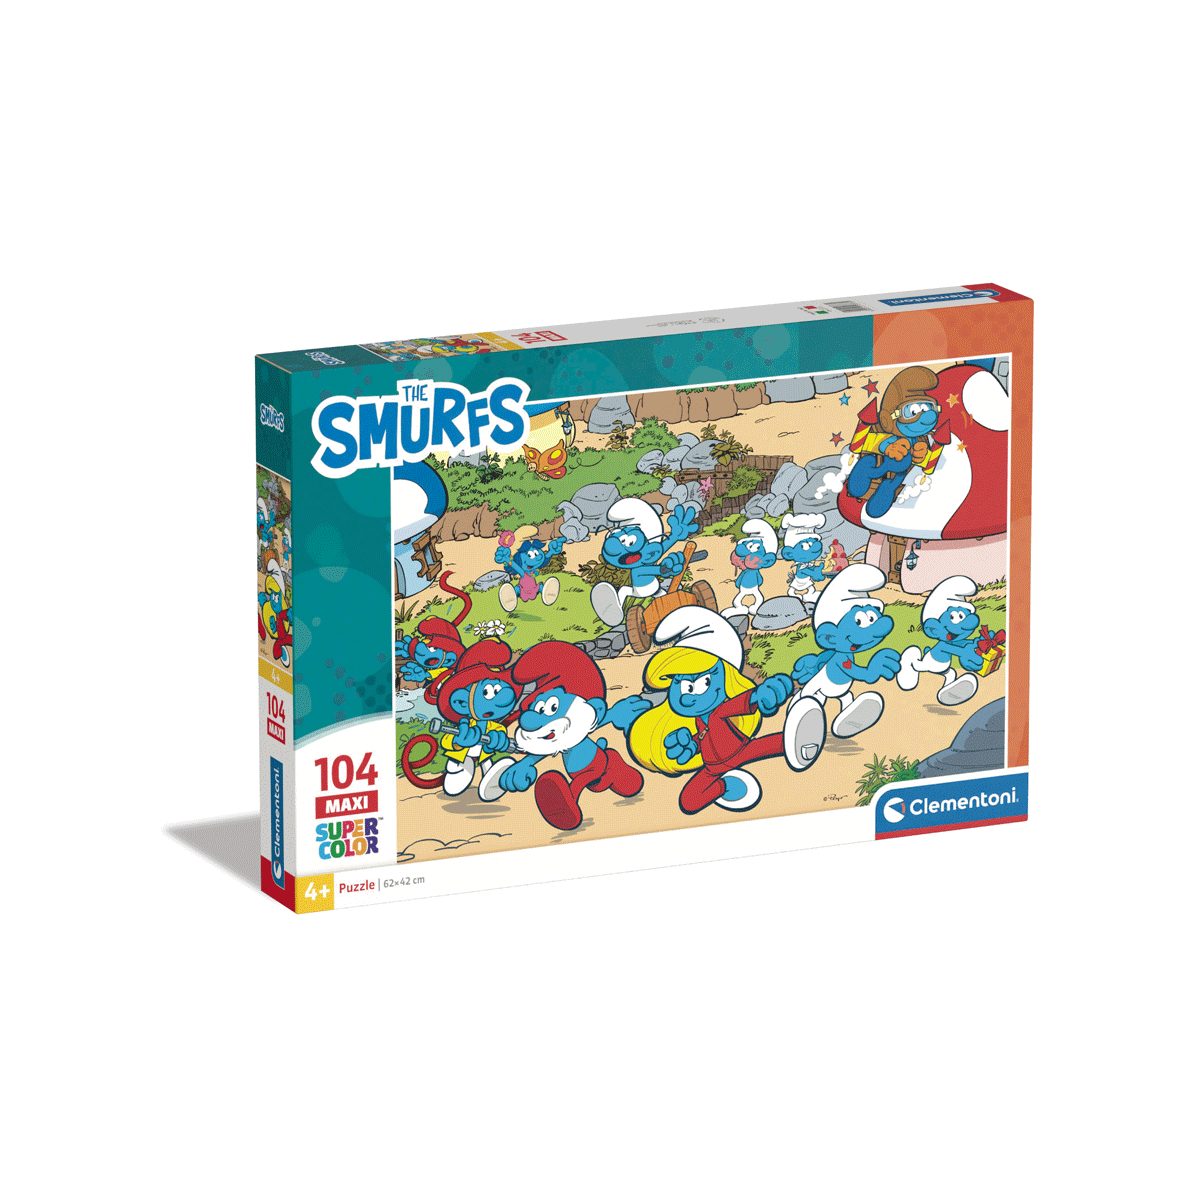 Clementoni supercolor puzzle the smurfs - 104 maxi pezzi, puzzle bambini 4 anni - CLEMENTONI